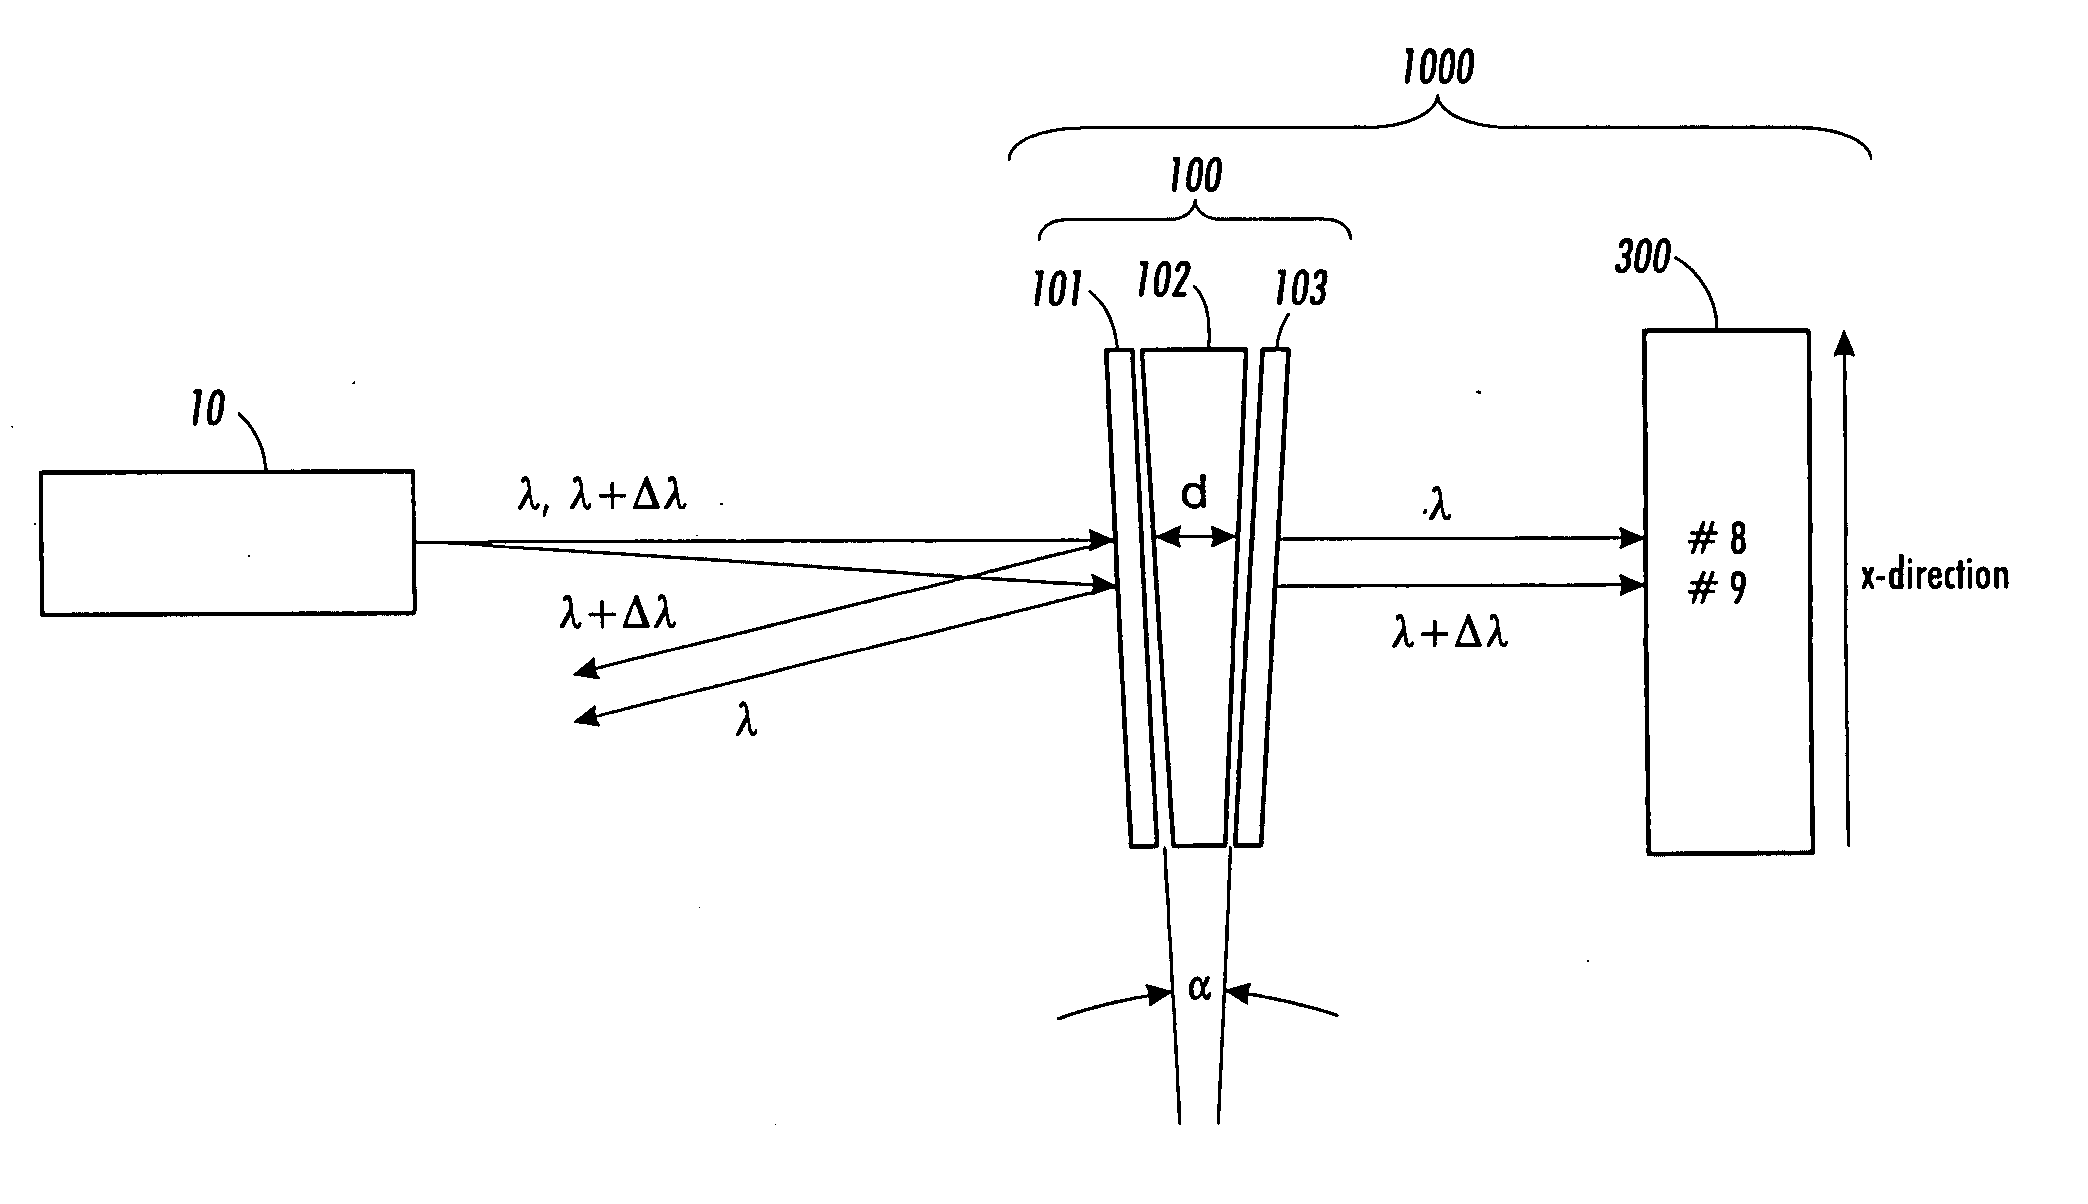 Chip-size wavelength detector